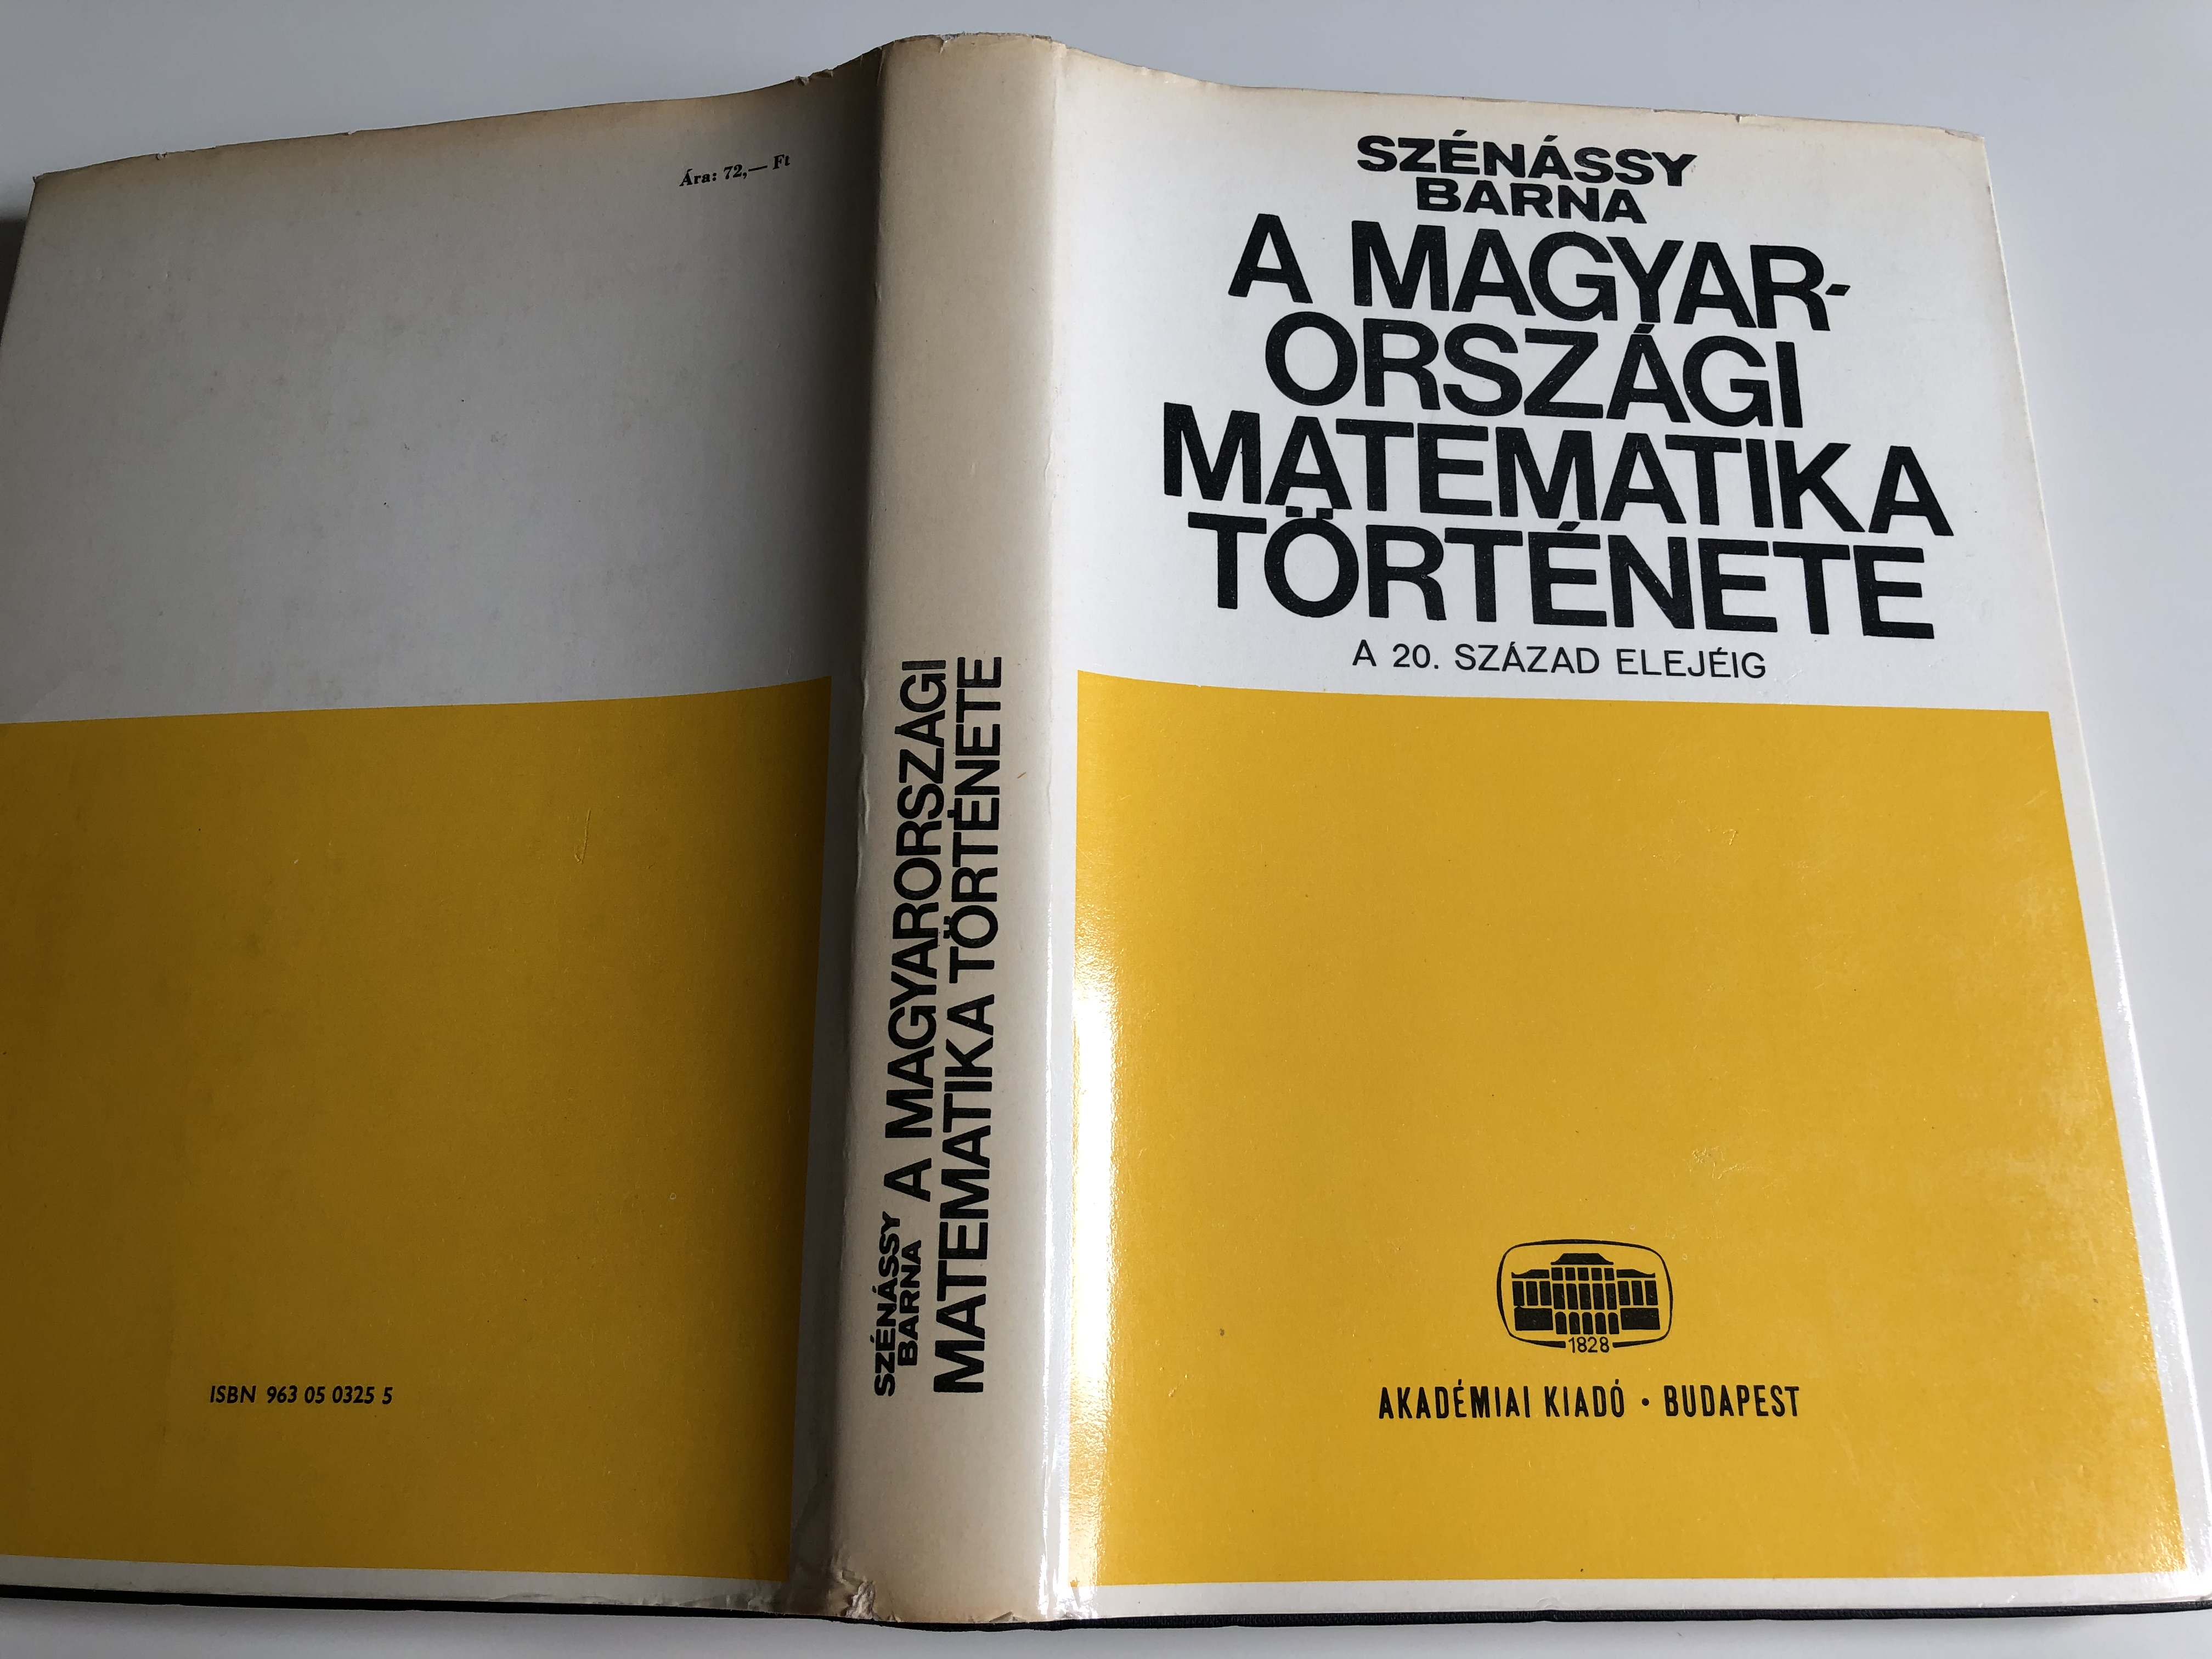 a-magyarorsz-gi-matematika-t-rt-nete-a-20.-sz-zad-elej-ig-by-sz-n-ssy-barna-2nd-edition-akad-miai-kiad-1974-21-.jpg